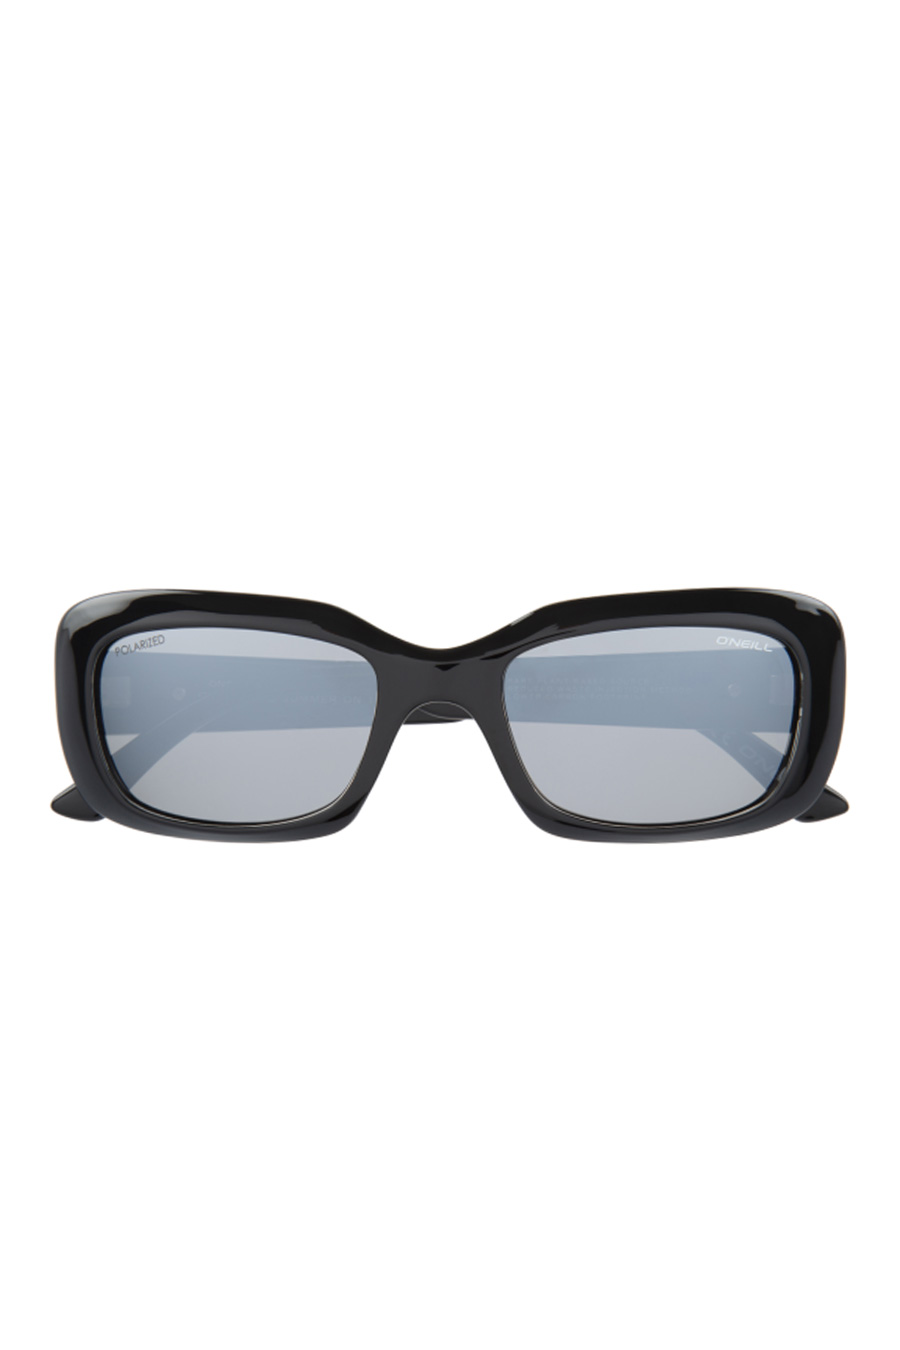 Солнечные очки ONEILL ONS-9012-20-104P